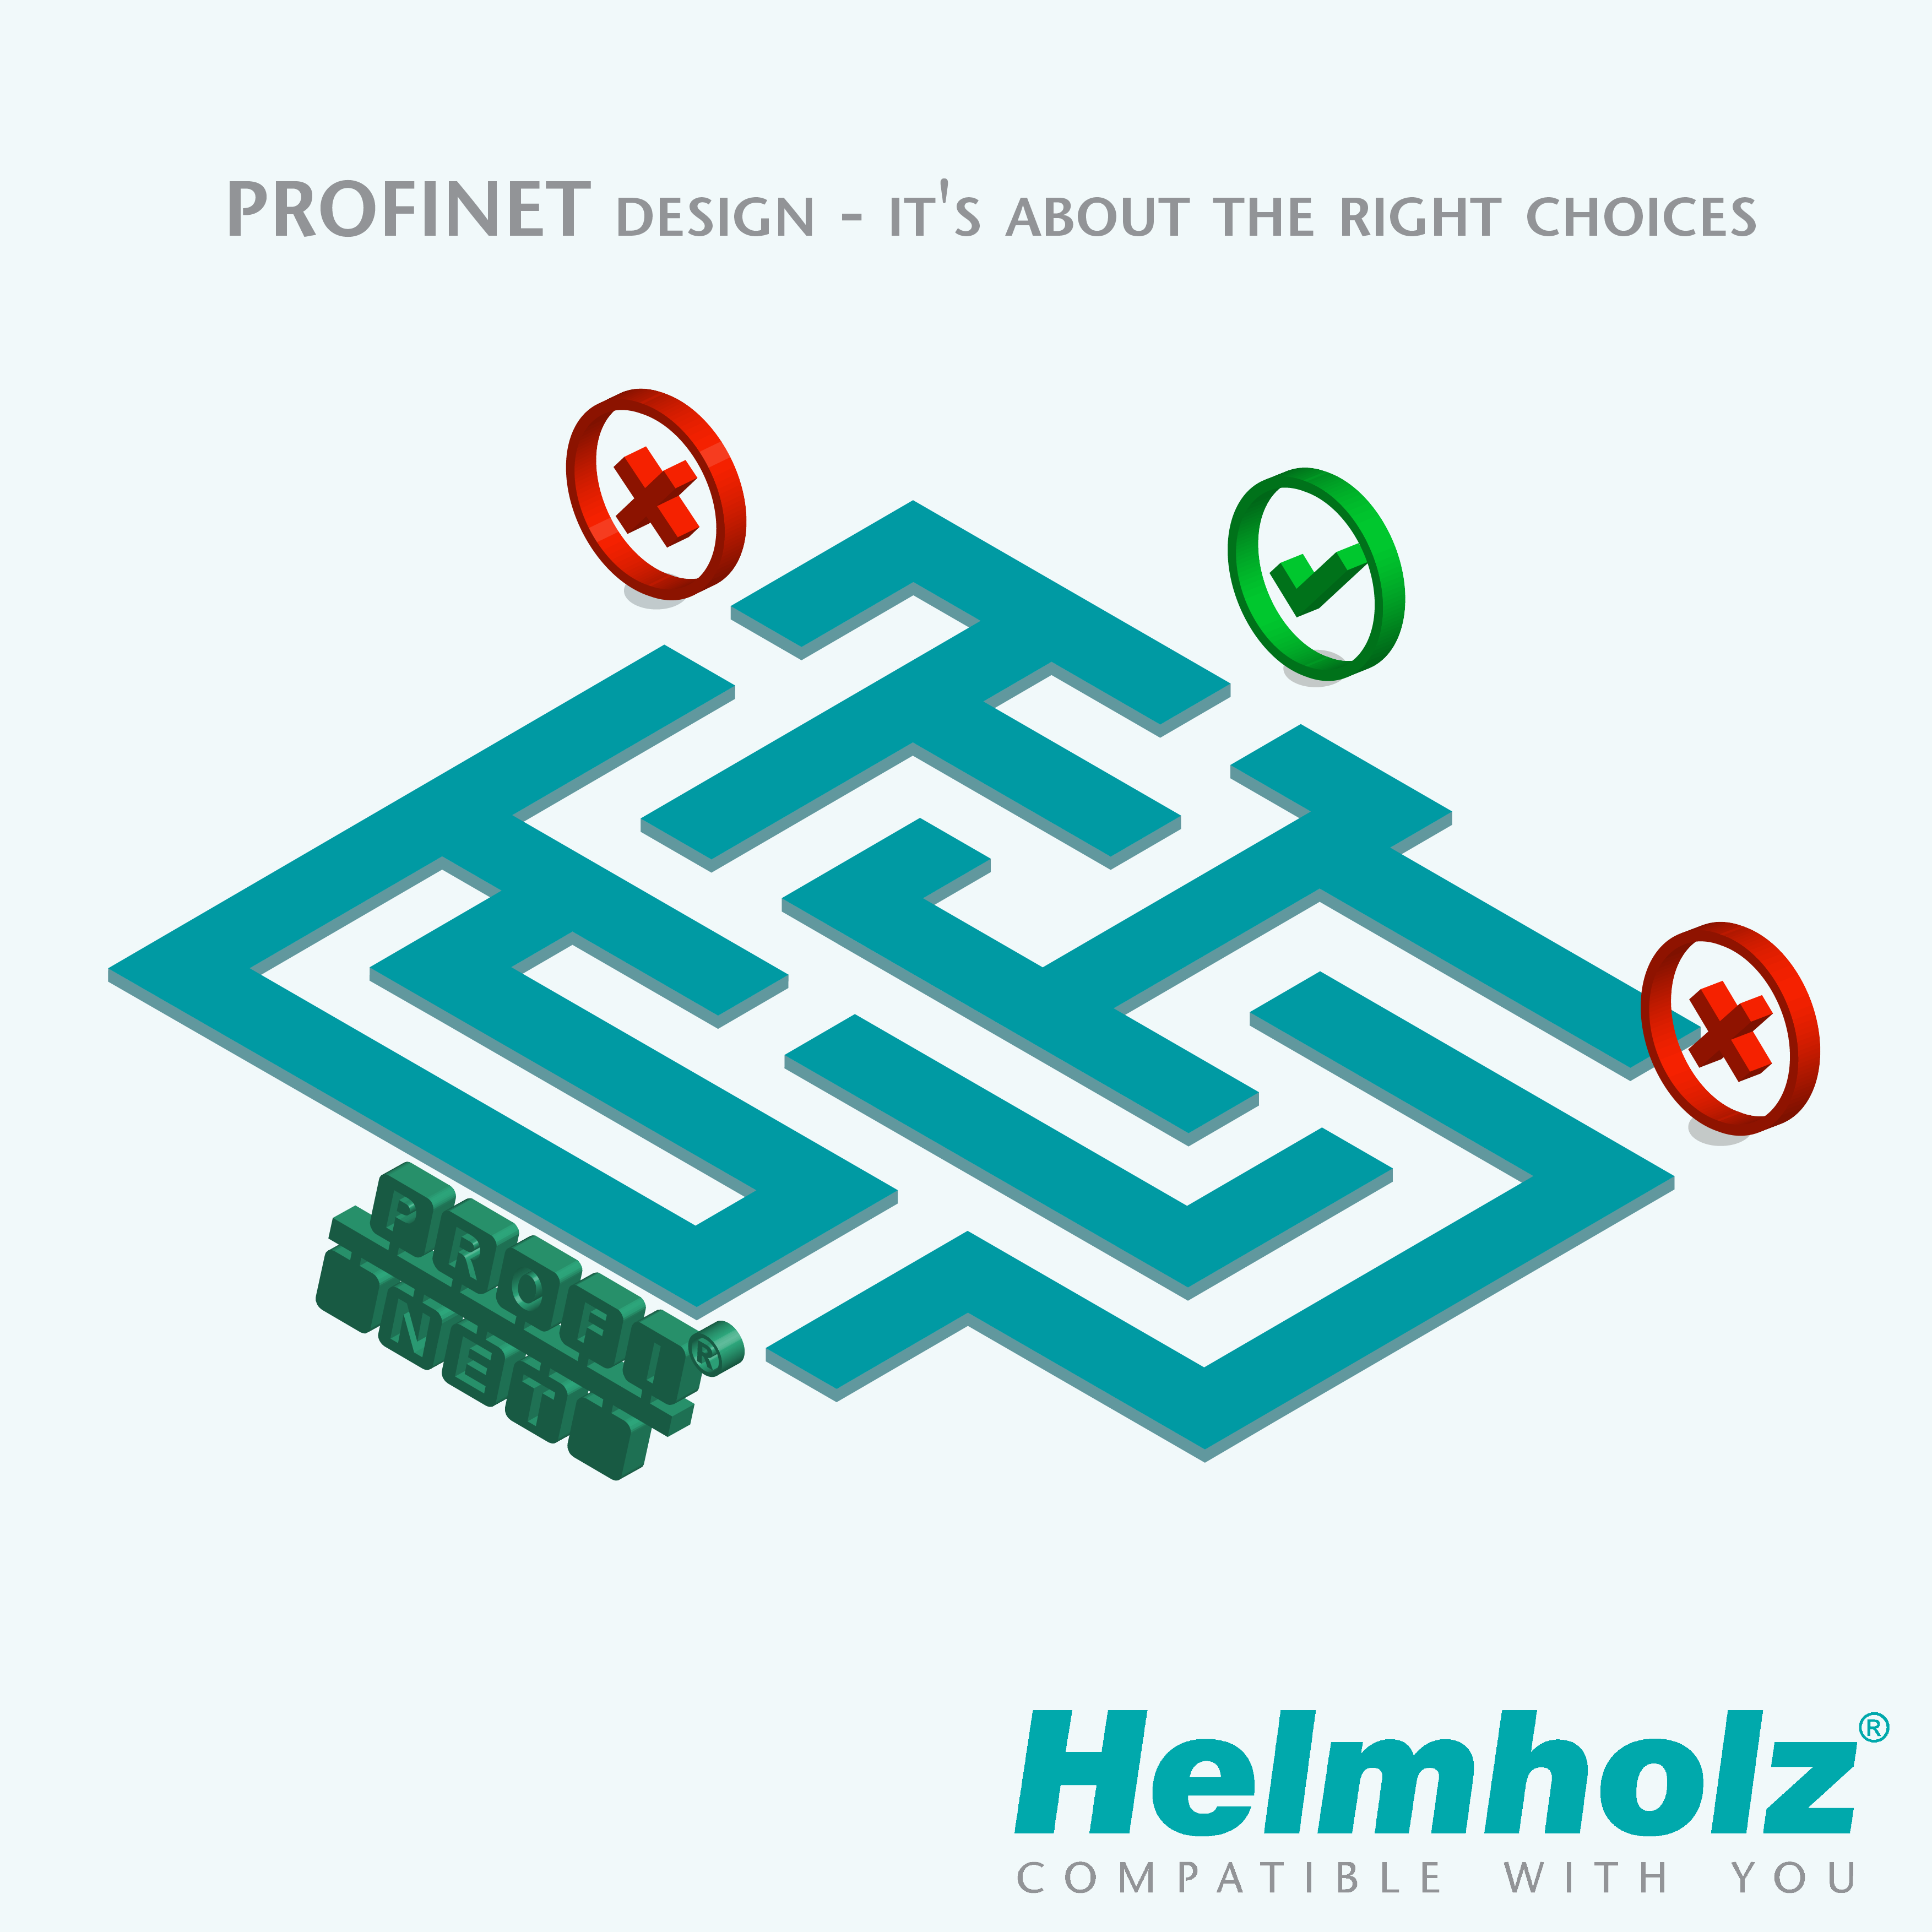 Je bekijkt nu Helmholz start met PROFINET Design training